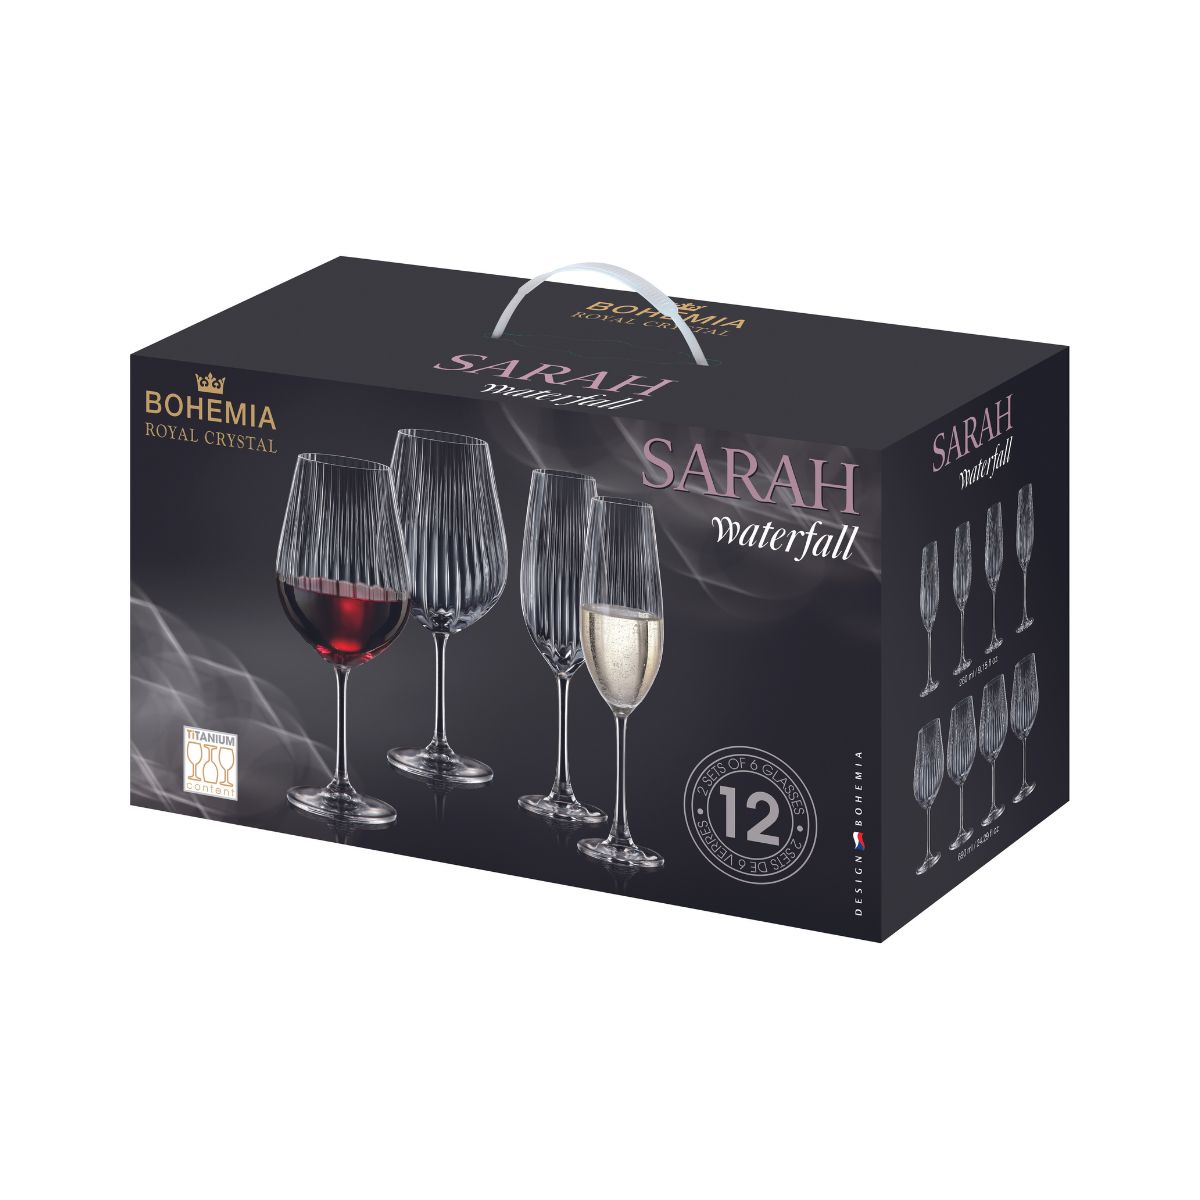 Bucatarie - Set de 12 pahare pentru vin rosu si sampanie, transparent, din cristal de Bohemia, 260/690 ml, Sarah Waterfall, hectarul.ro